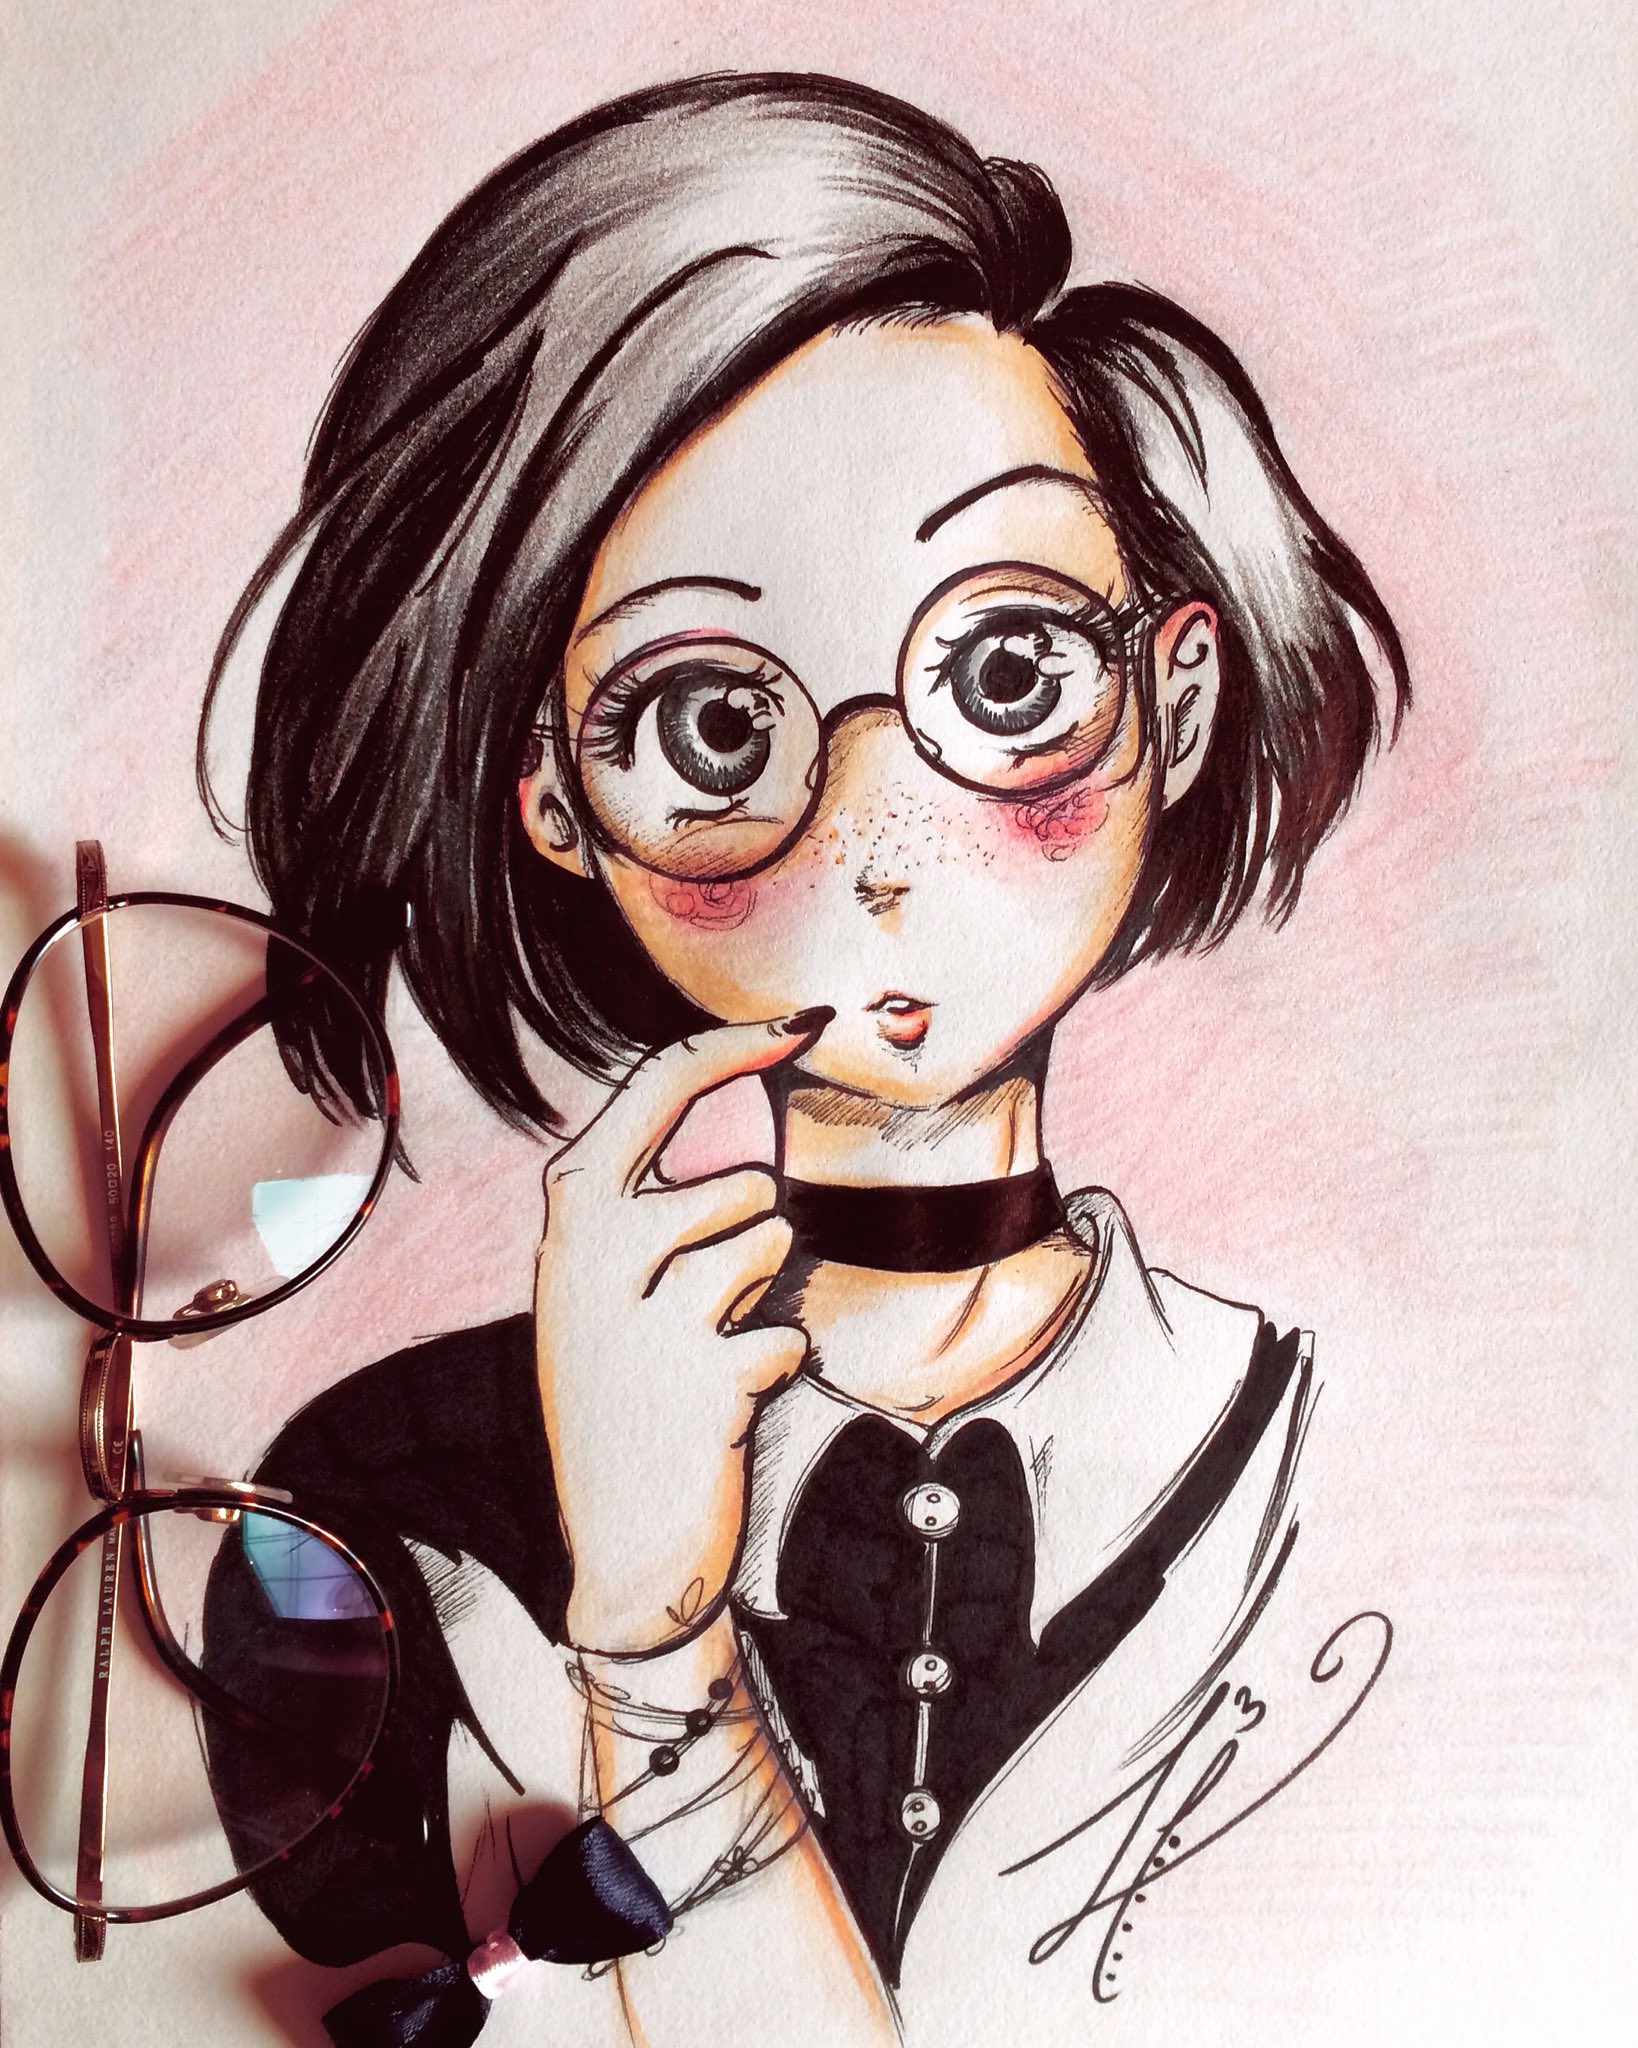 Ilaria Laria ♡ on Twitter: "#glasses #girl #art #drawing #manga #anime #pink #illustratio...